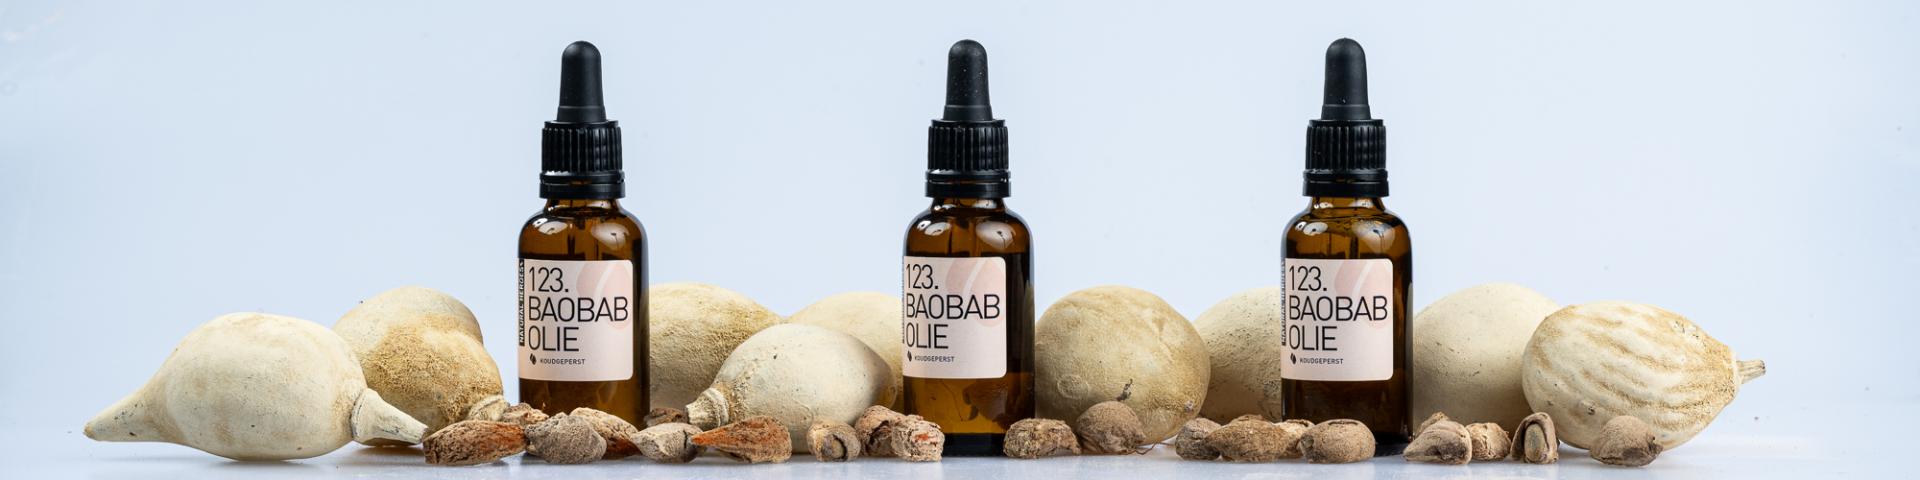 Baobab oil_3795_HZ83174